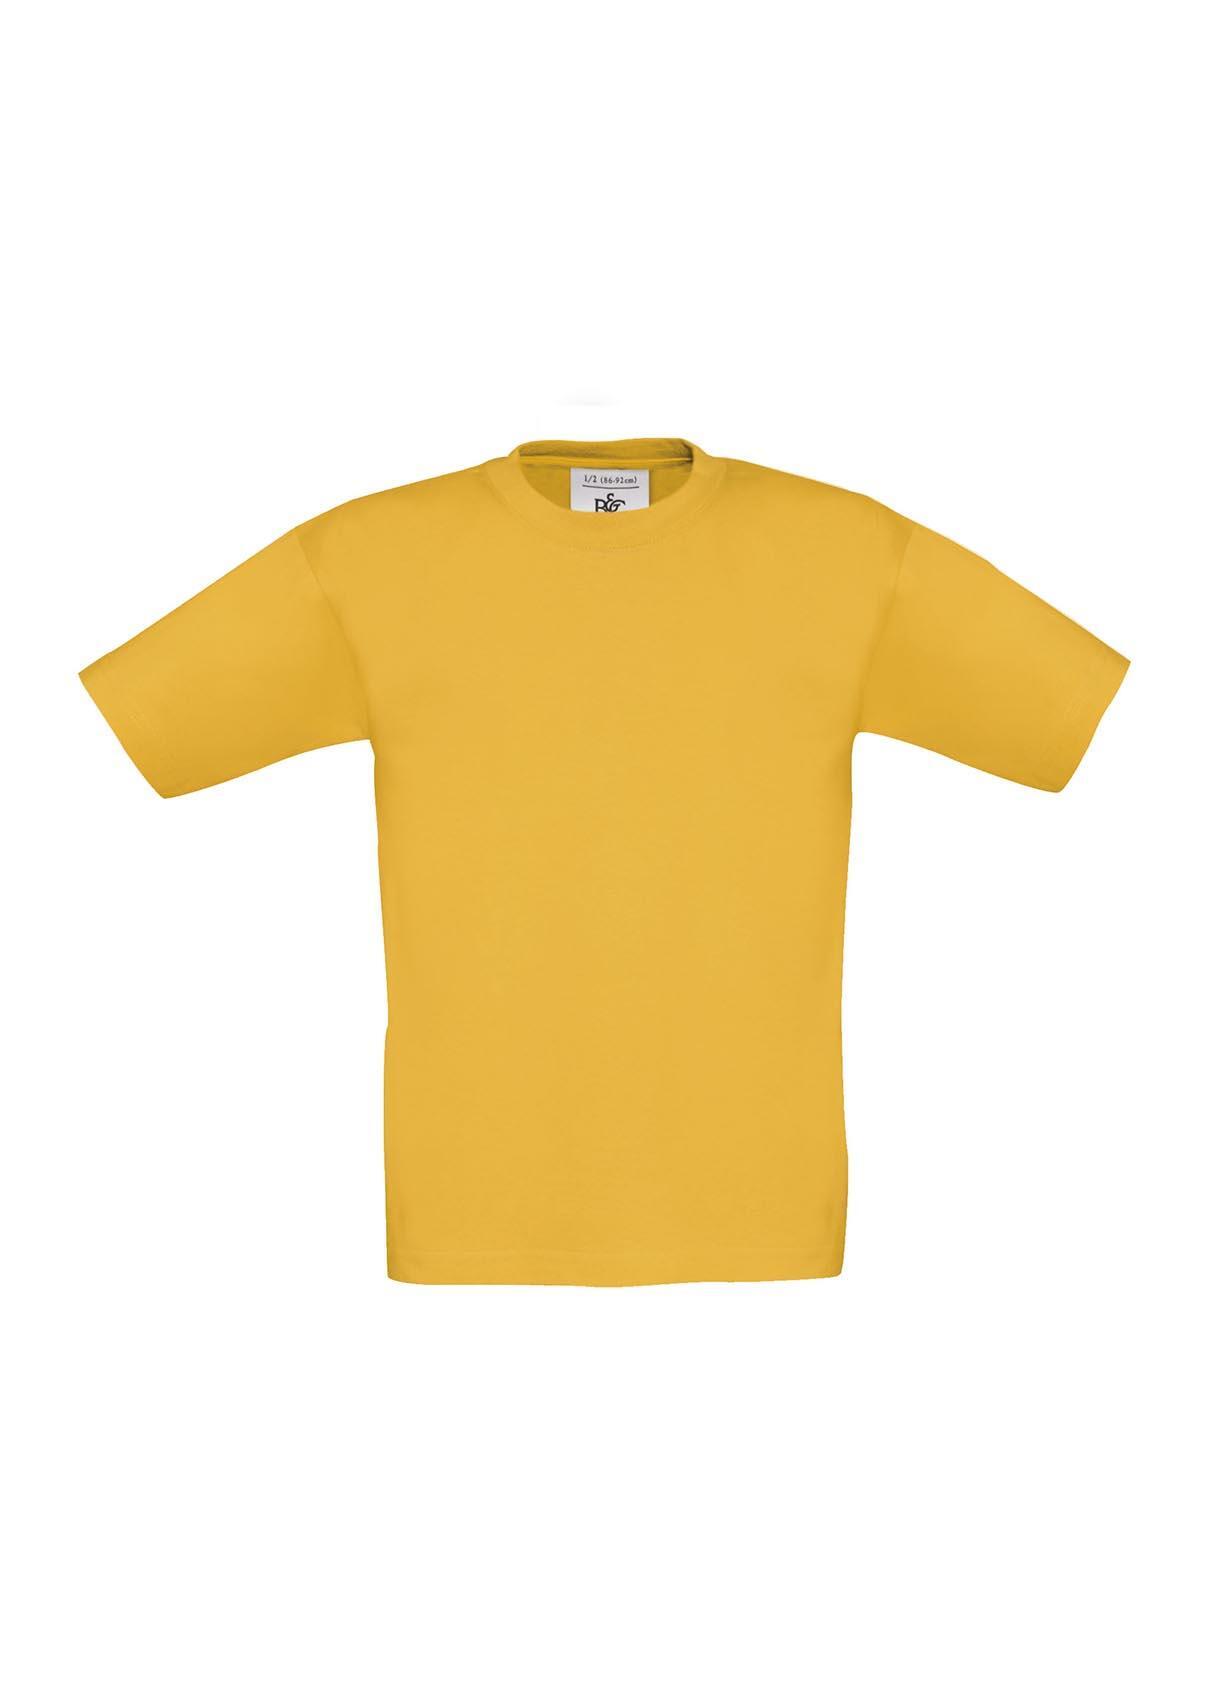 T-shirt voor kids goud kinder shirt